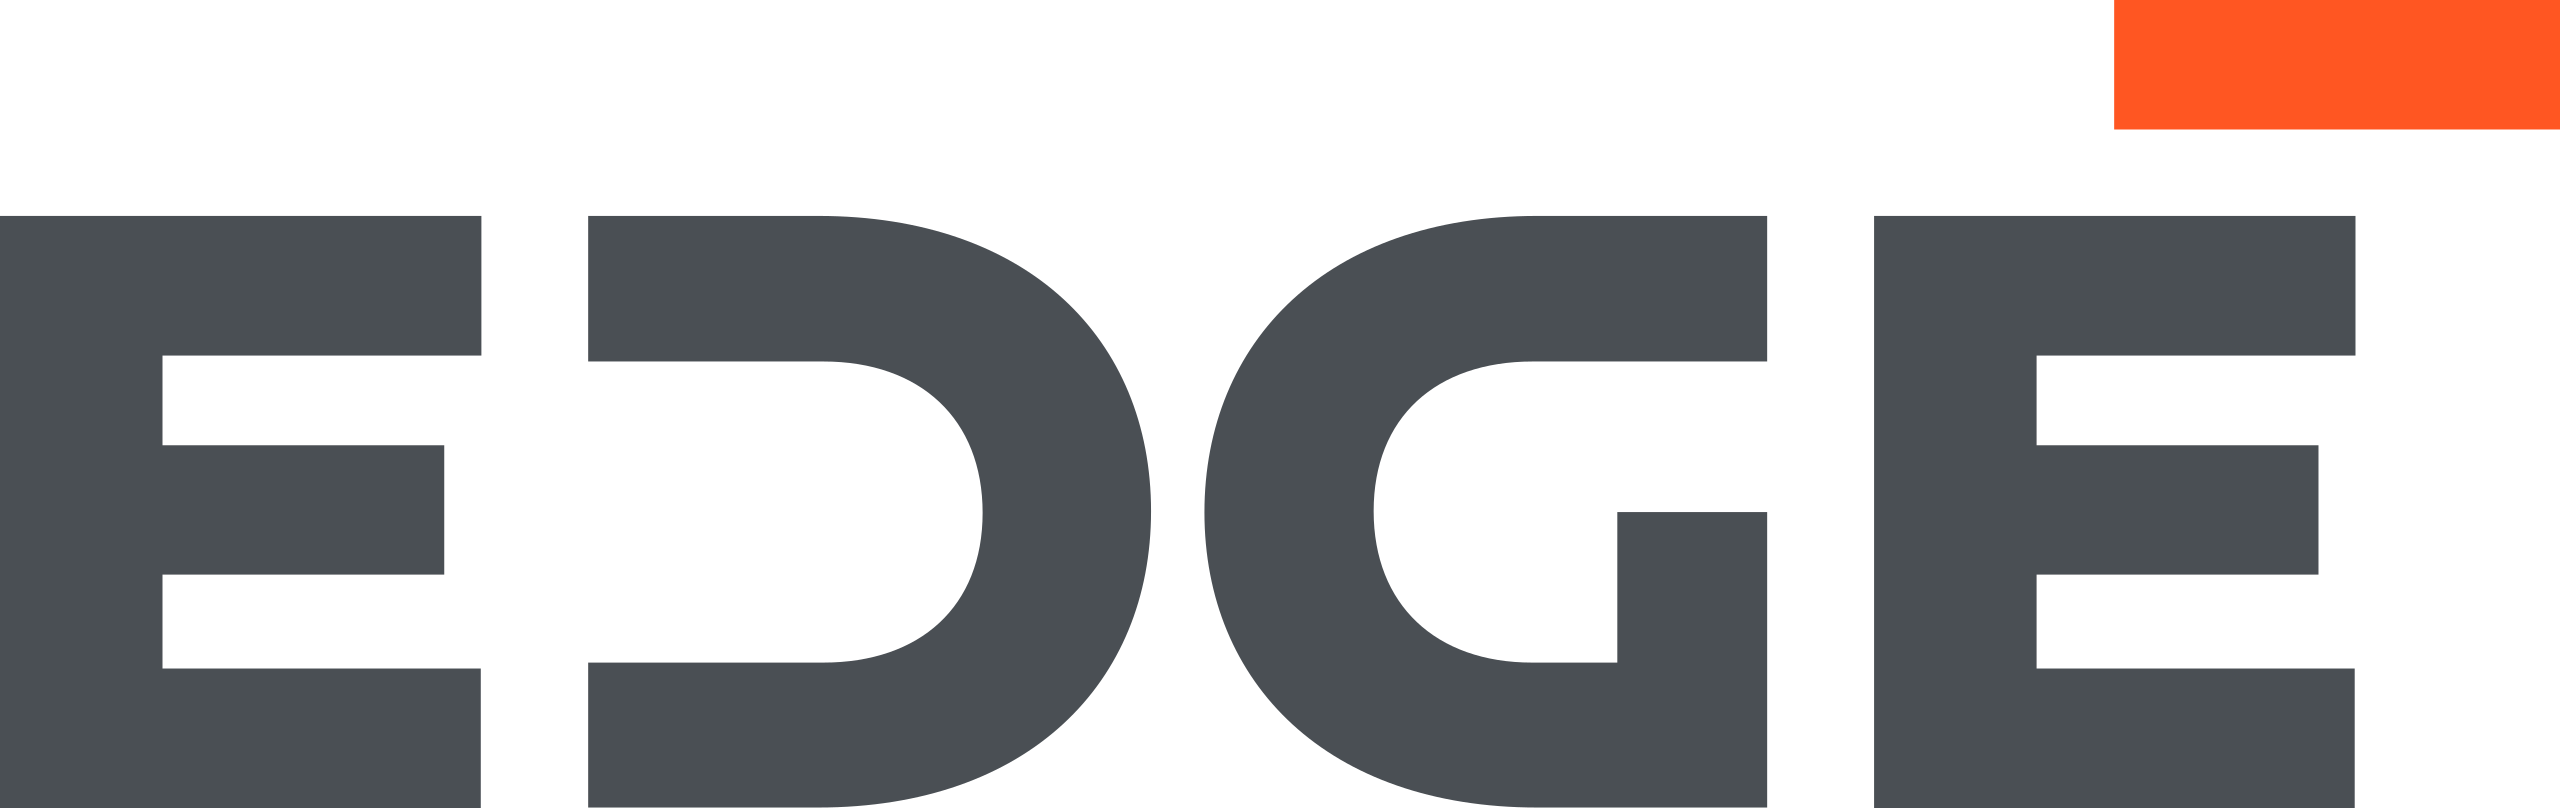 EDGE Group Brand Logo